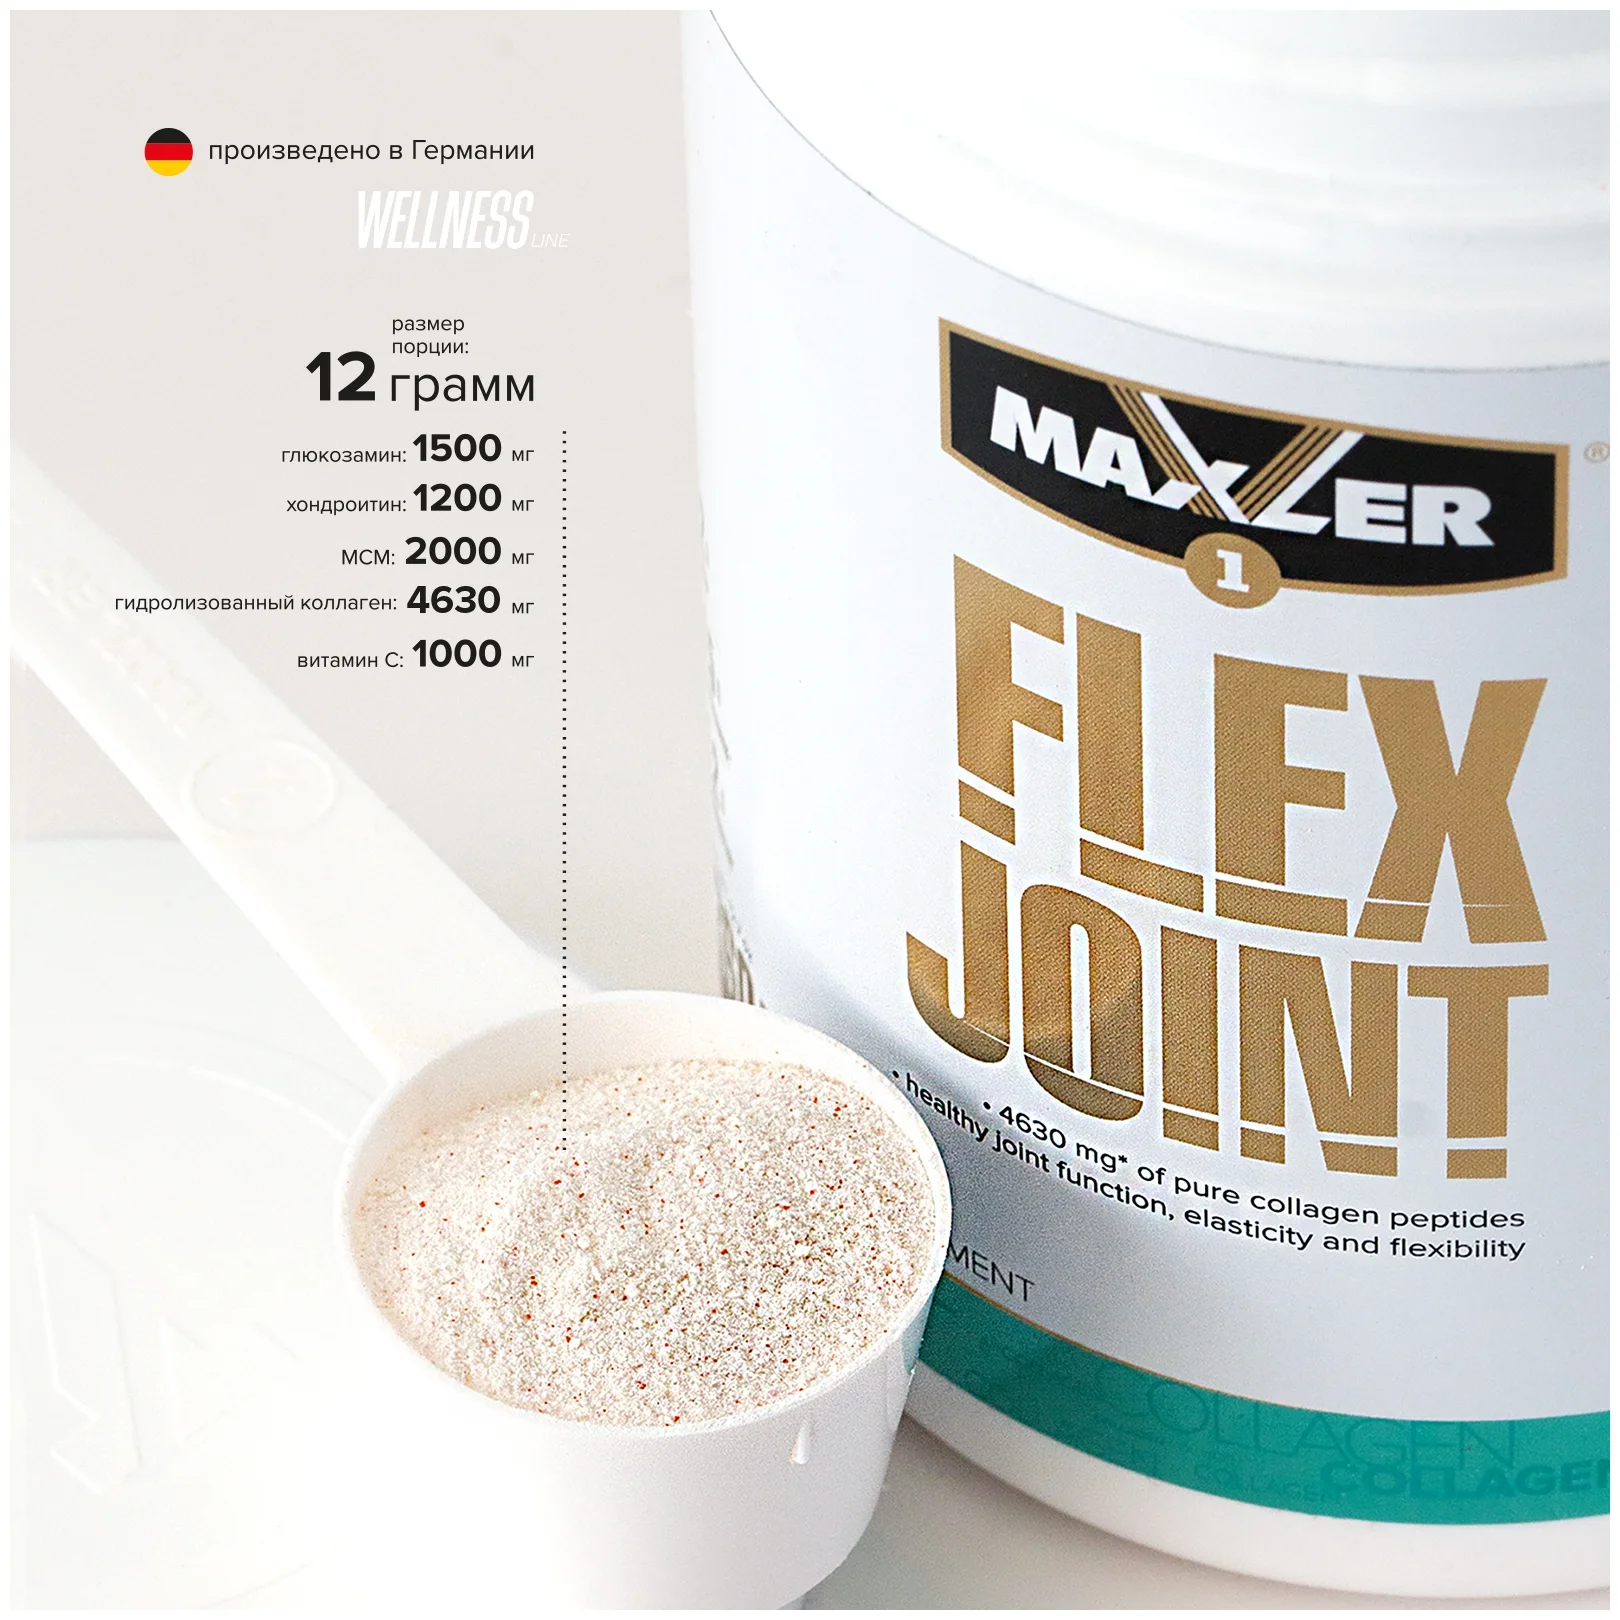 Maxler flex joint